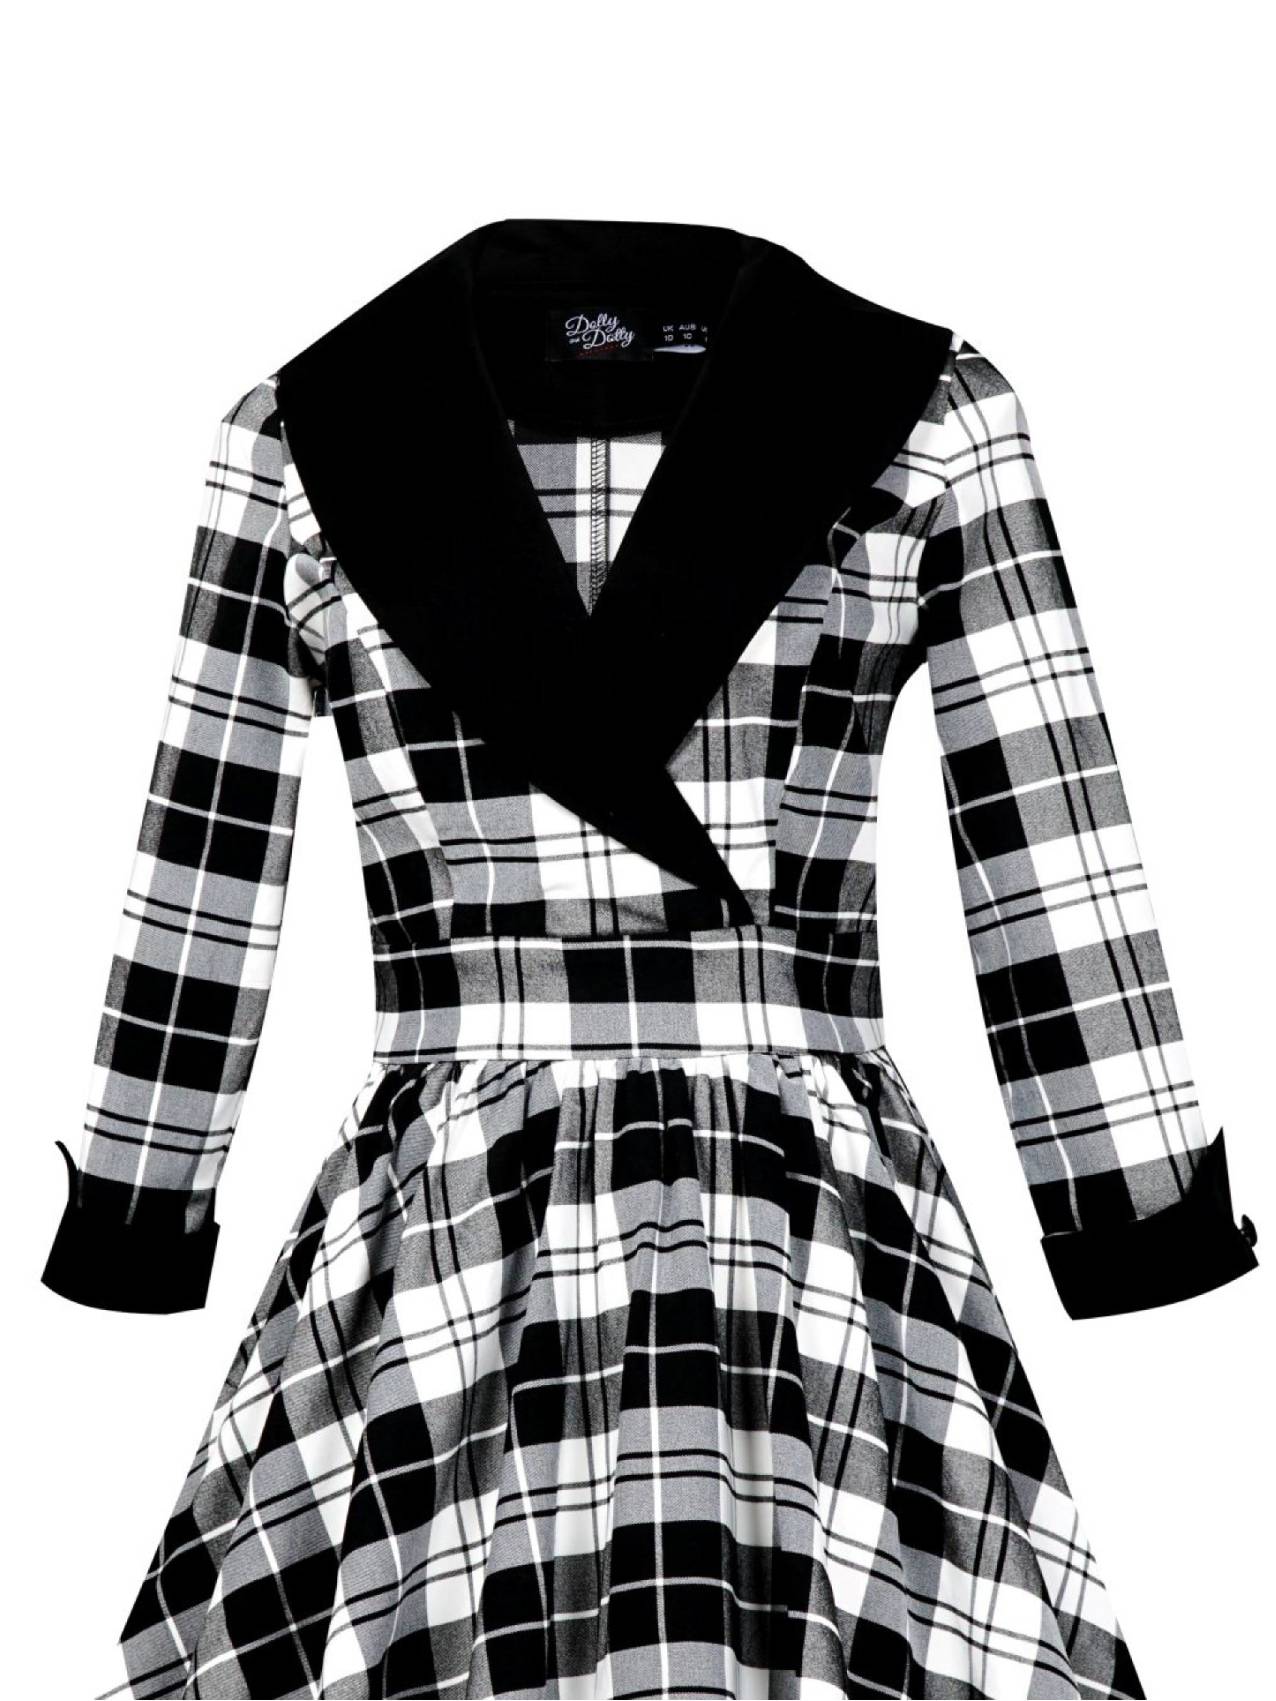 Dolly & Dotty Kleid Tiffany Black Tartan Coat Dress